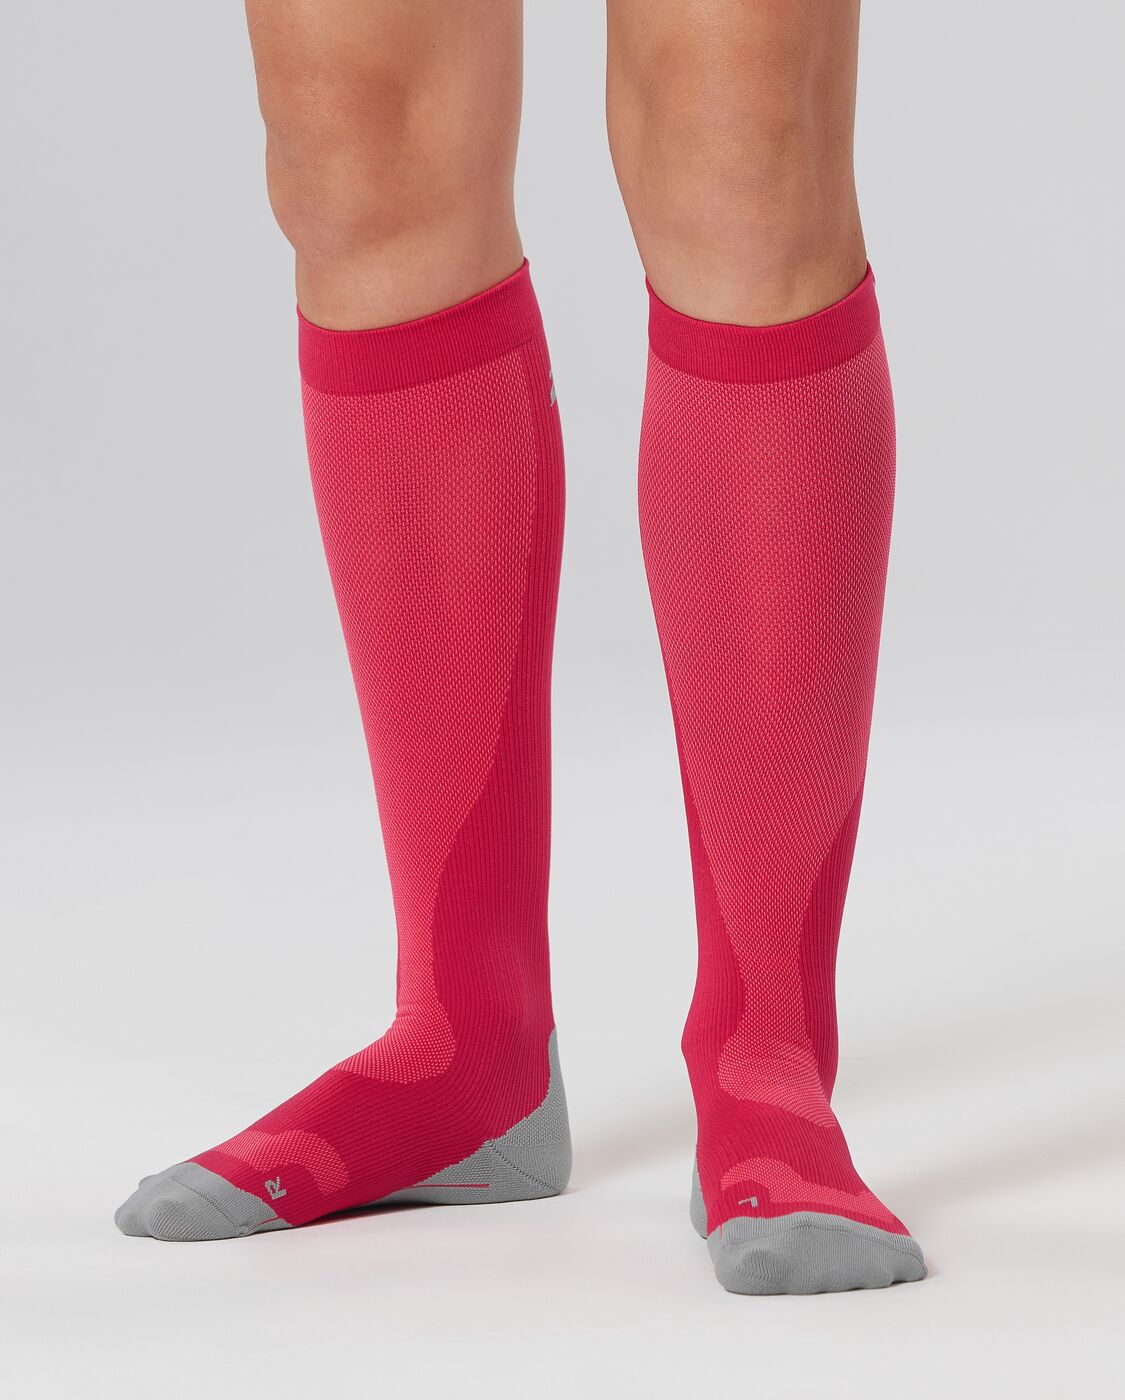 2XU Compression Performance Run Socks, Pink/Fluro Coral, Large